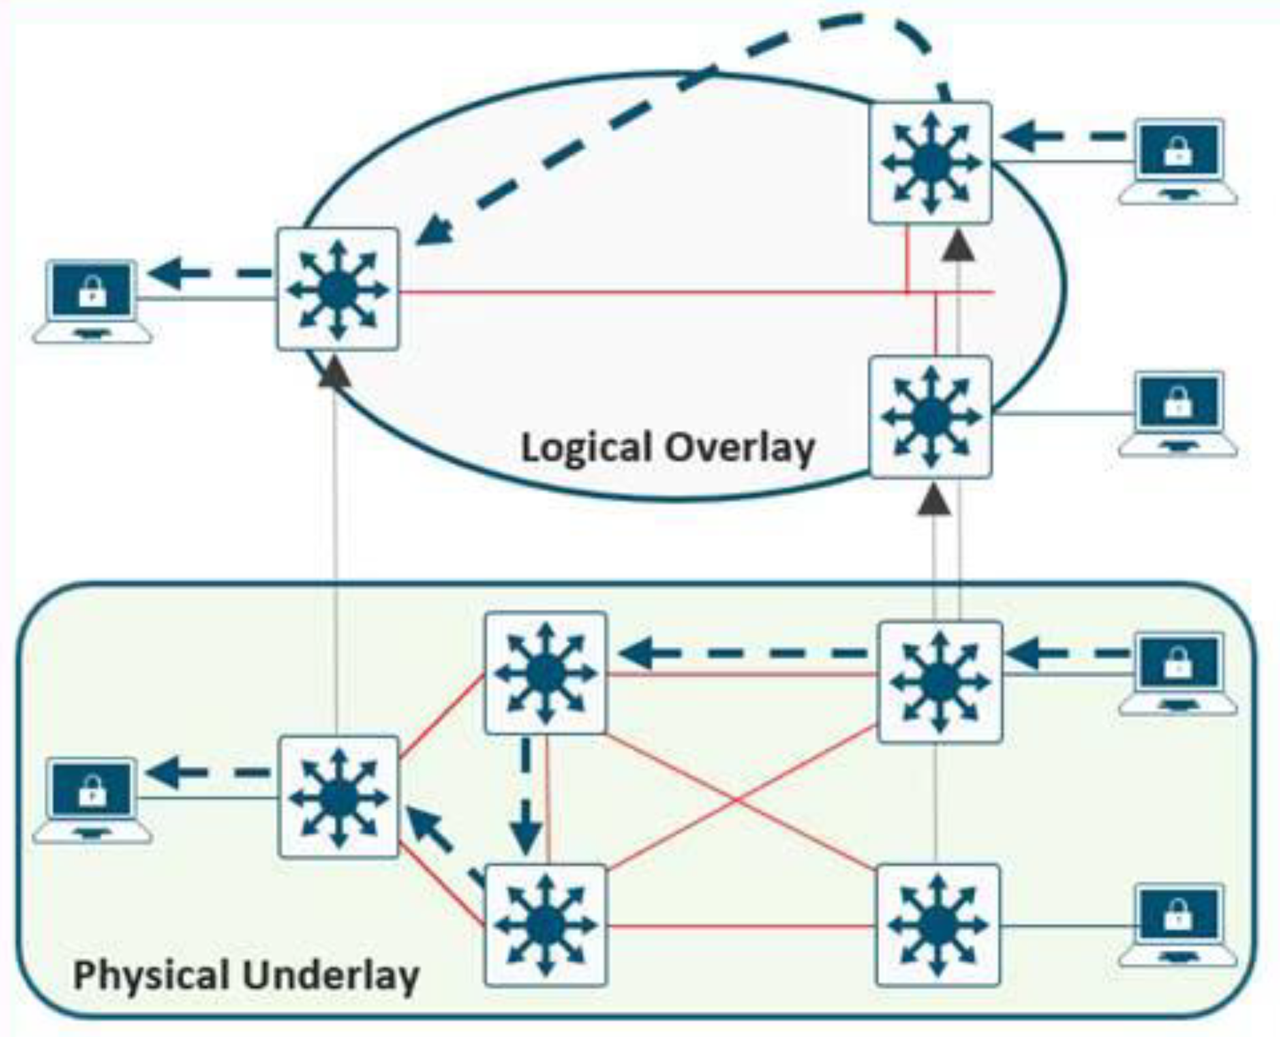 Figure 1. Overlay and Underlay Relationship.